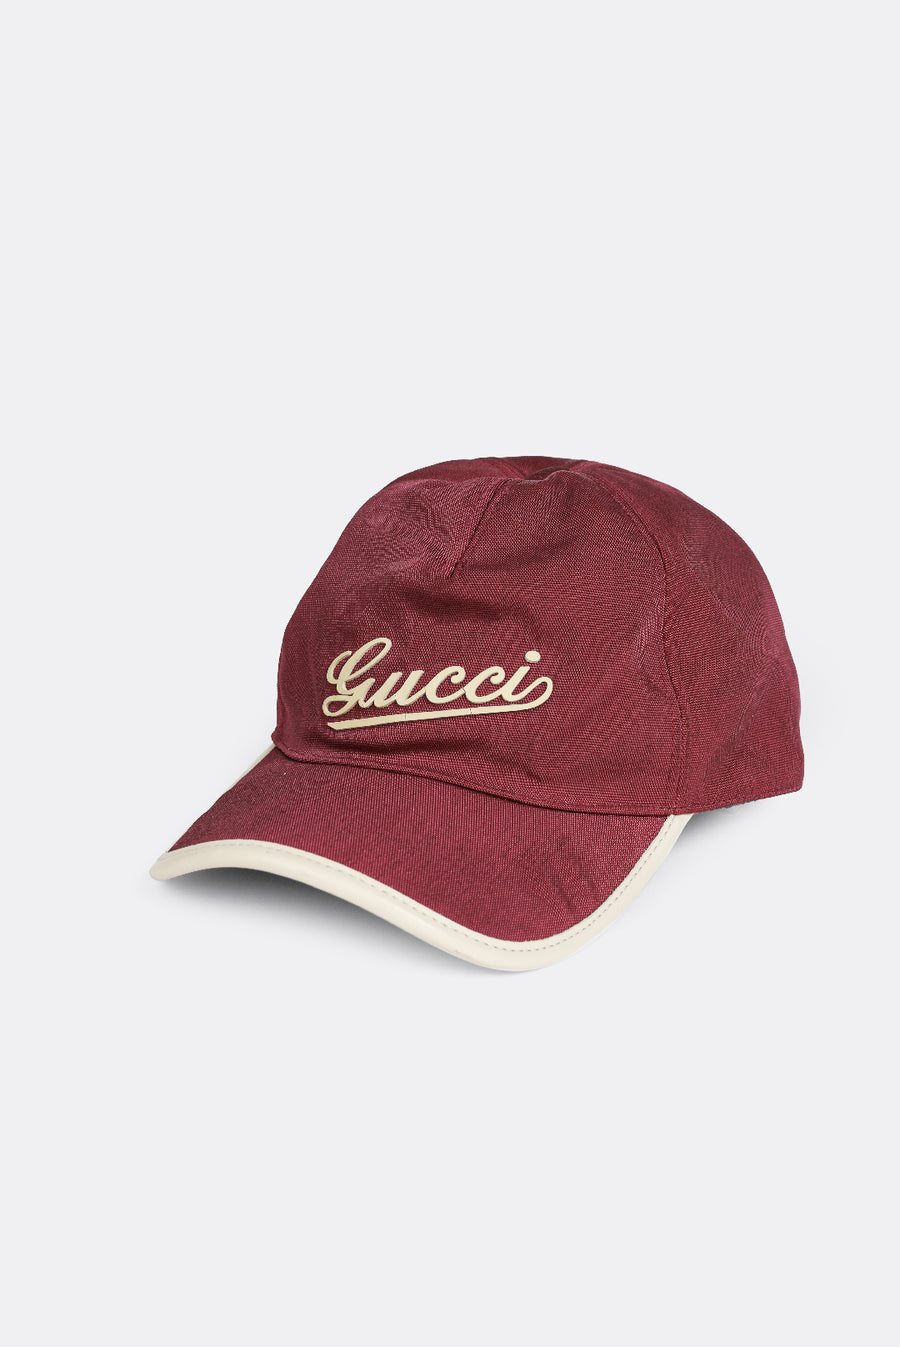 Vintage Gucci Hat